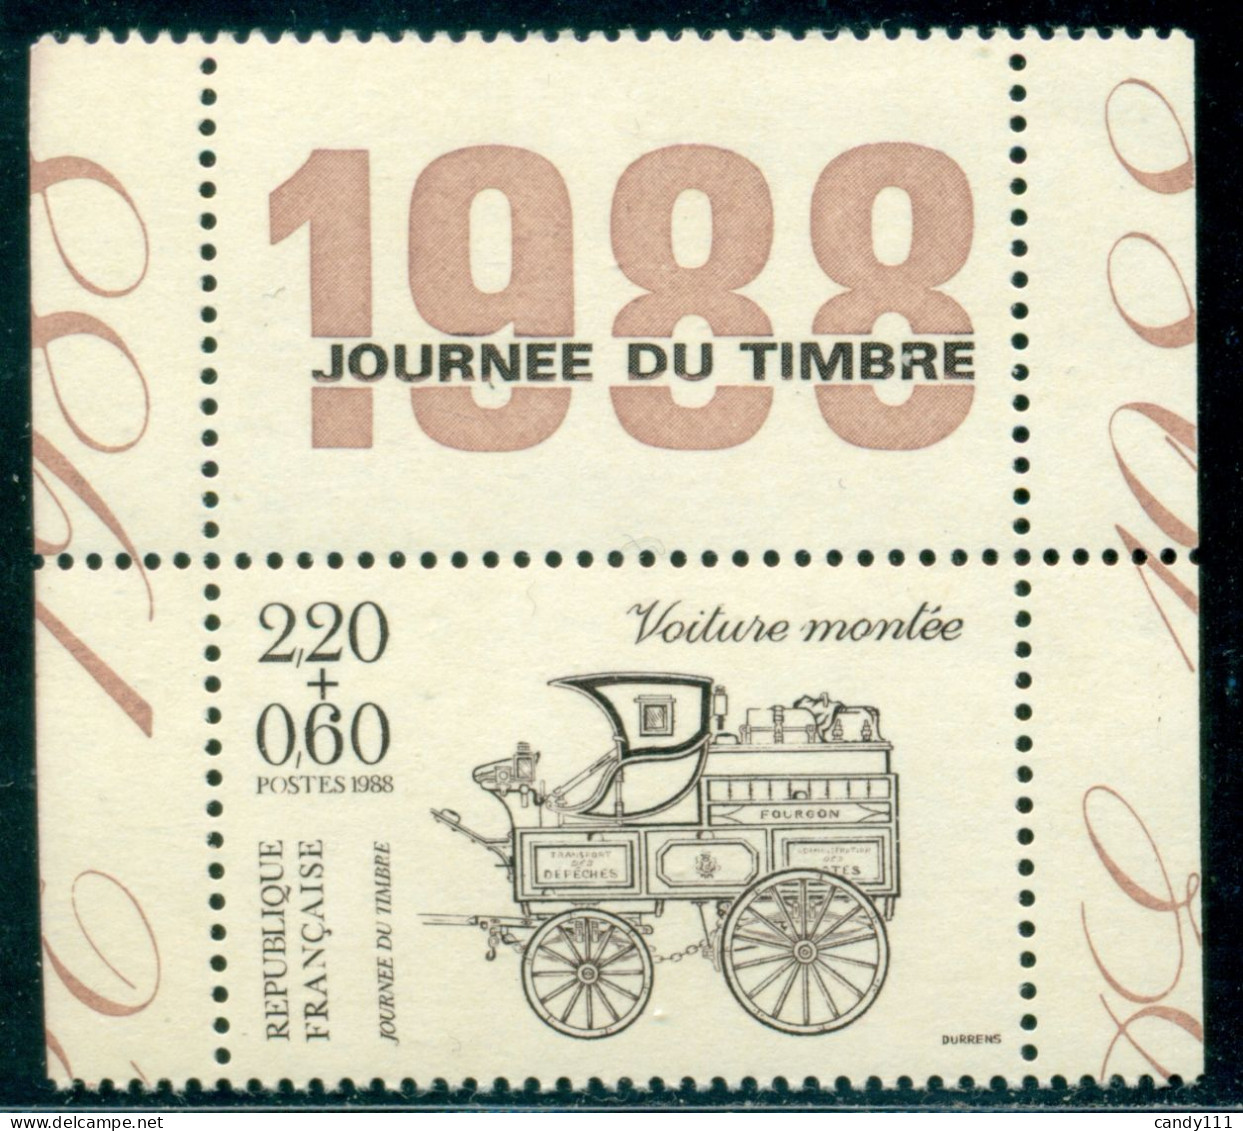 1988 Postal,post Coach,TOP TAB/1988,France,2662 Cb,MNH - Diligences